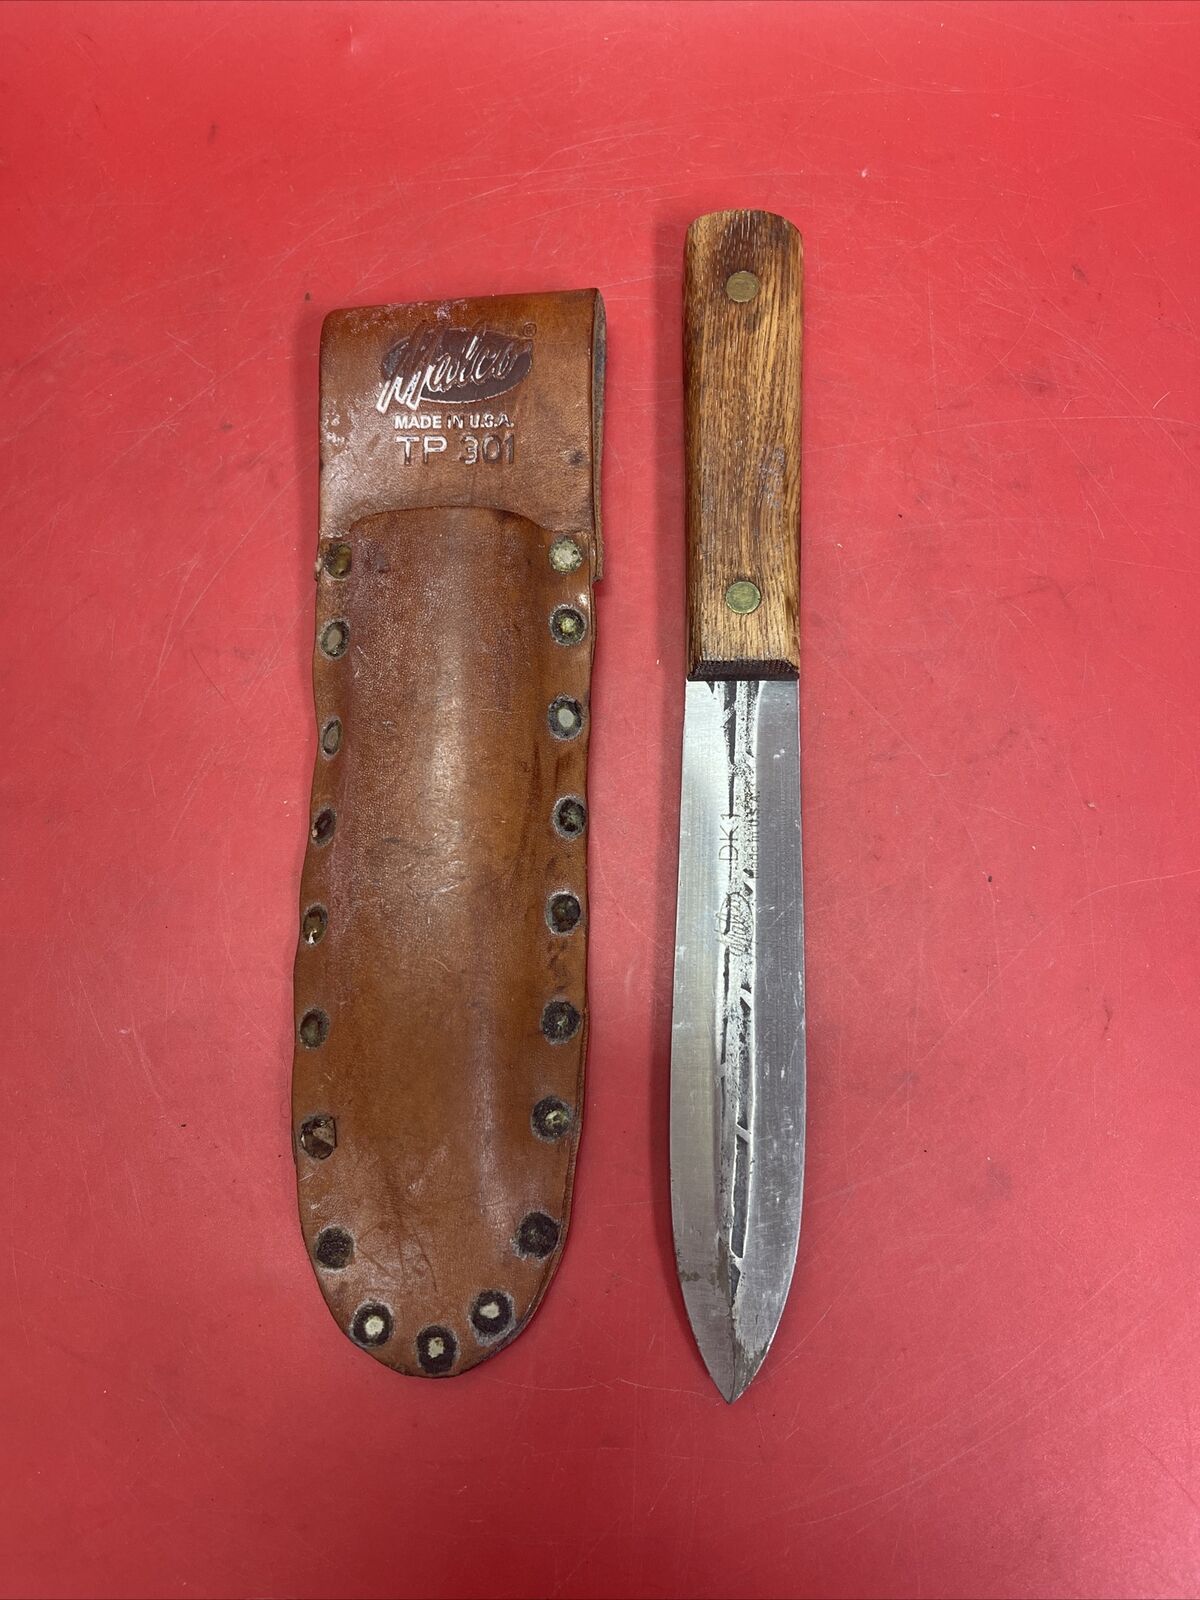 Vintage Knife Case Malco Tp-301 & Malco Knife DK 1